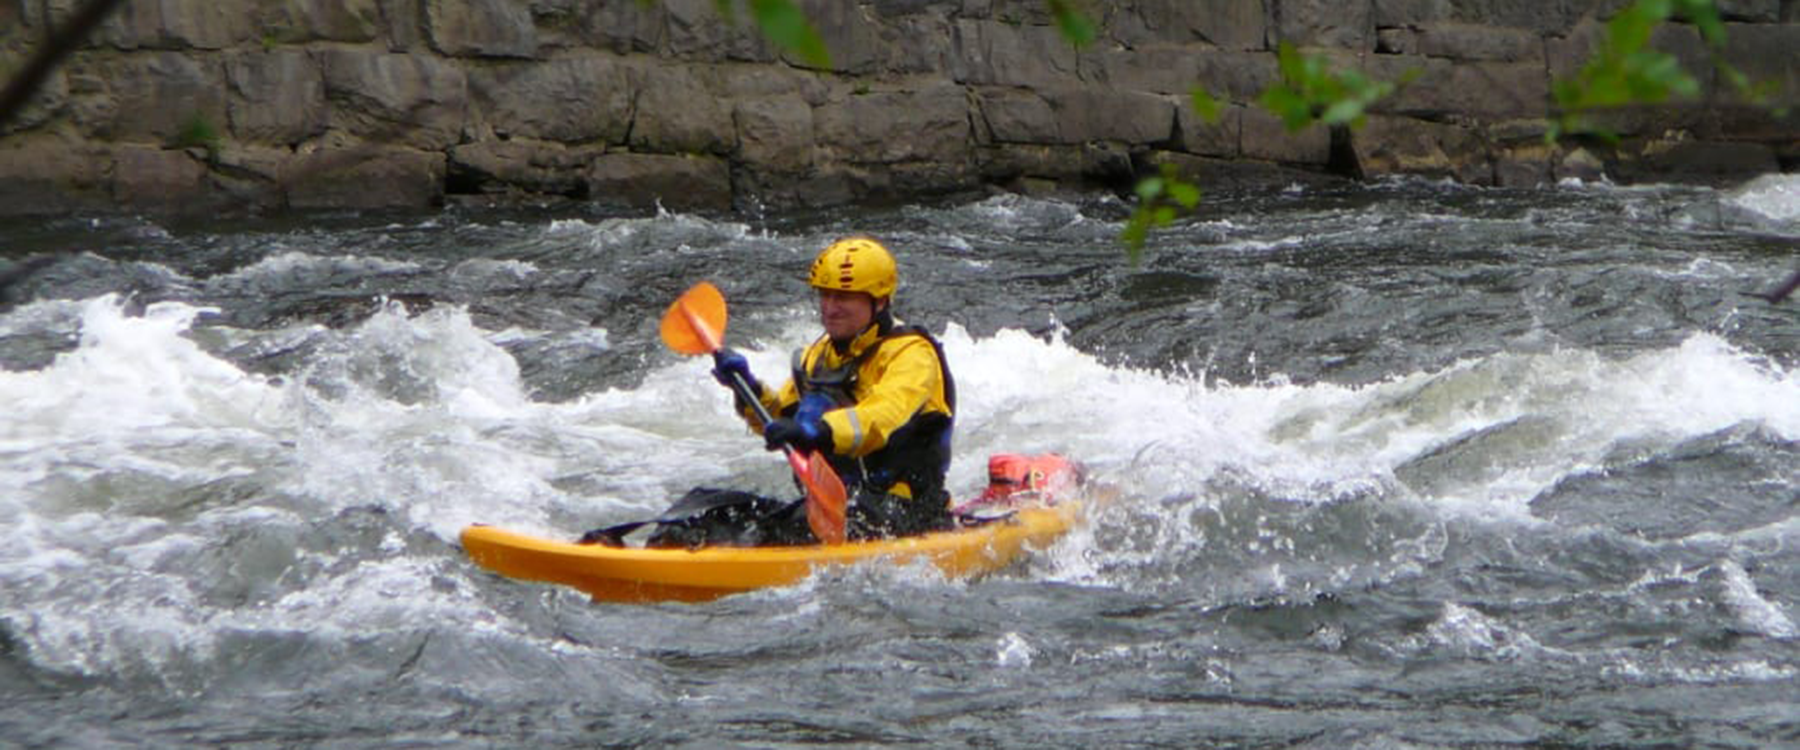 whitewater kayak the poconos river